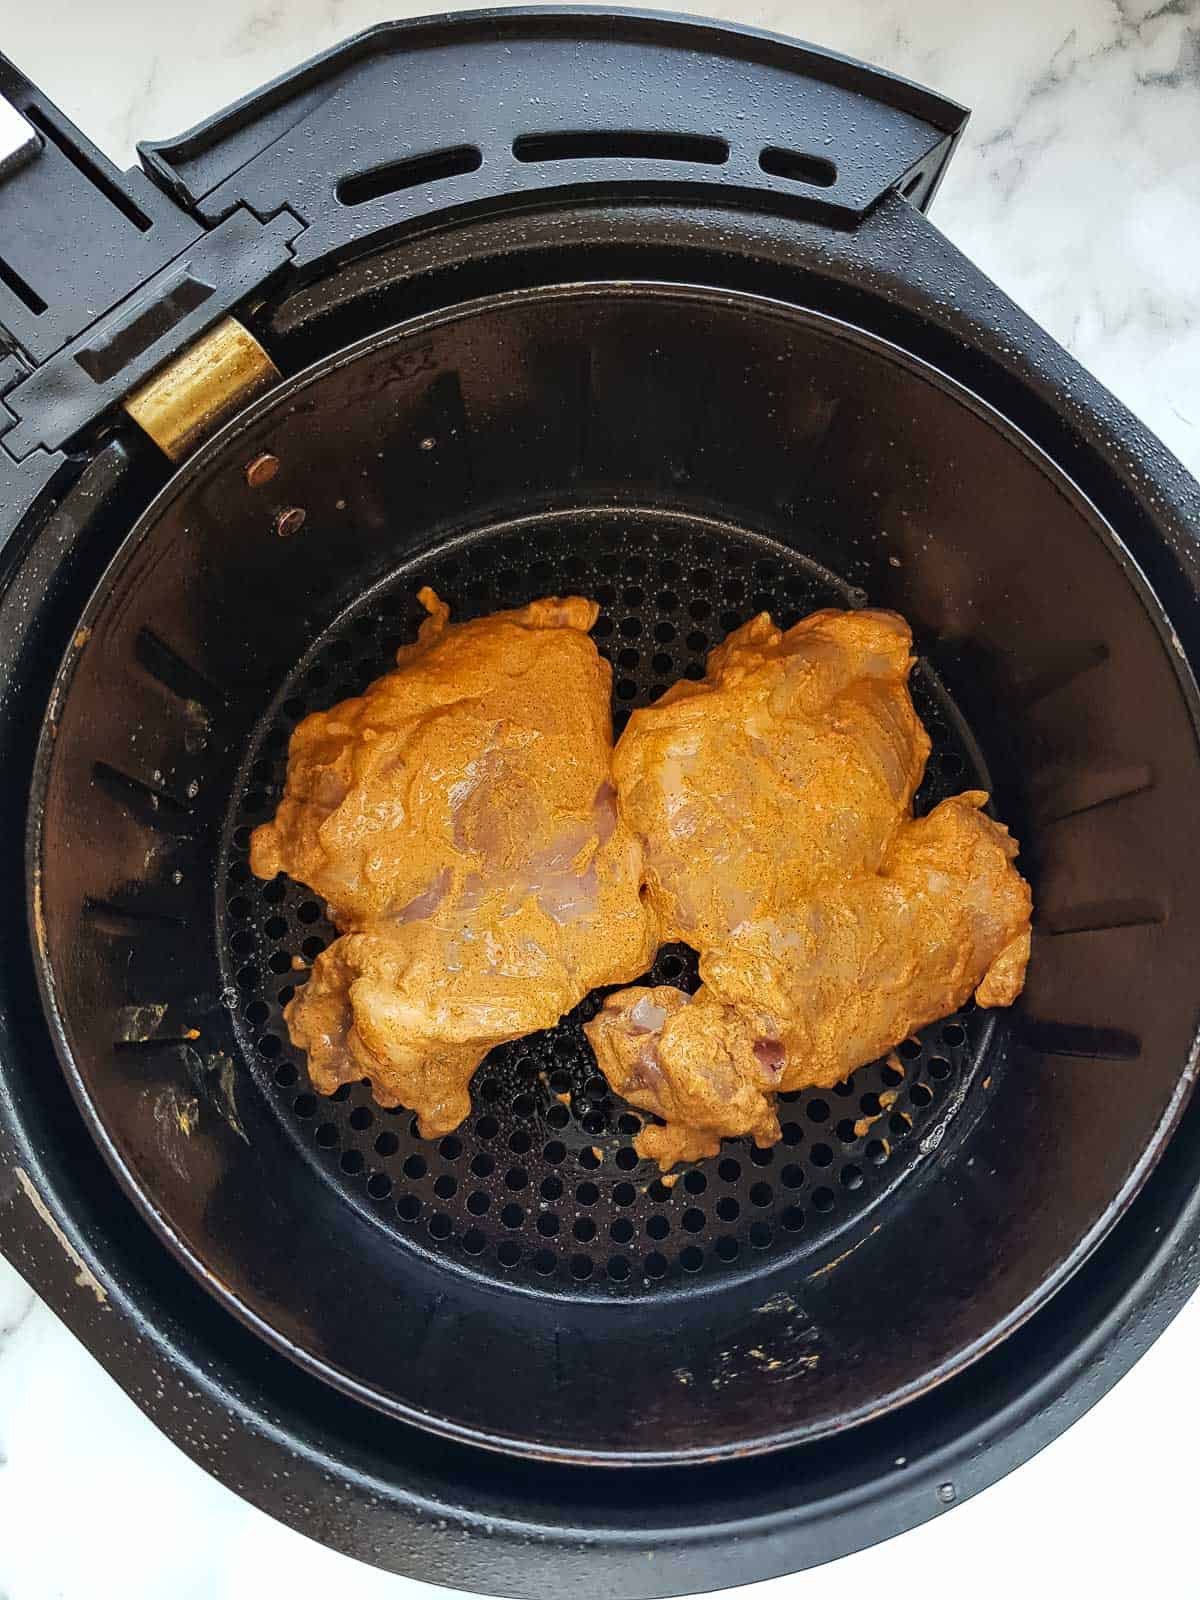 Marinated chicken thighs in an air fryer.